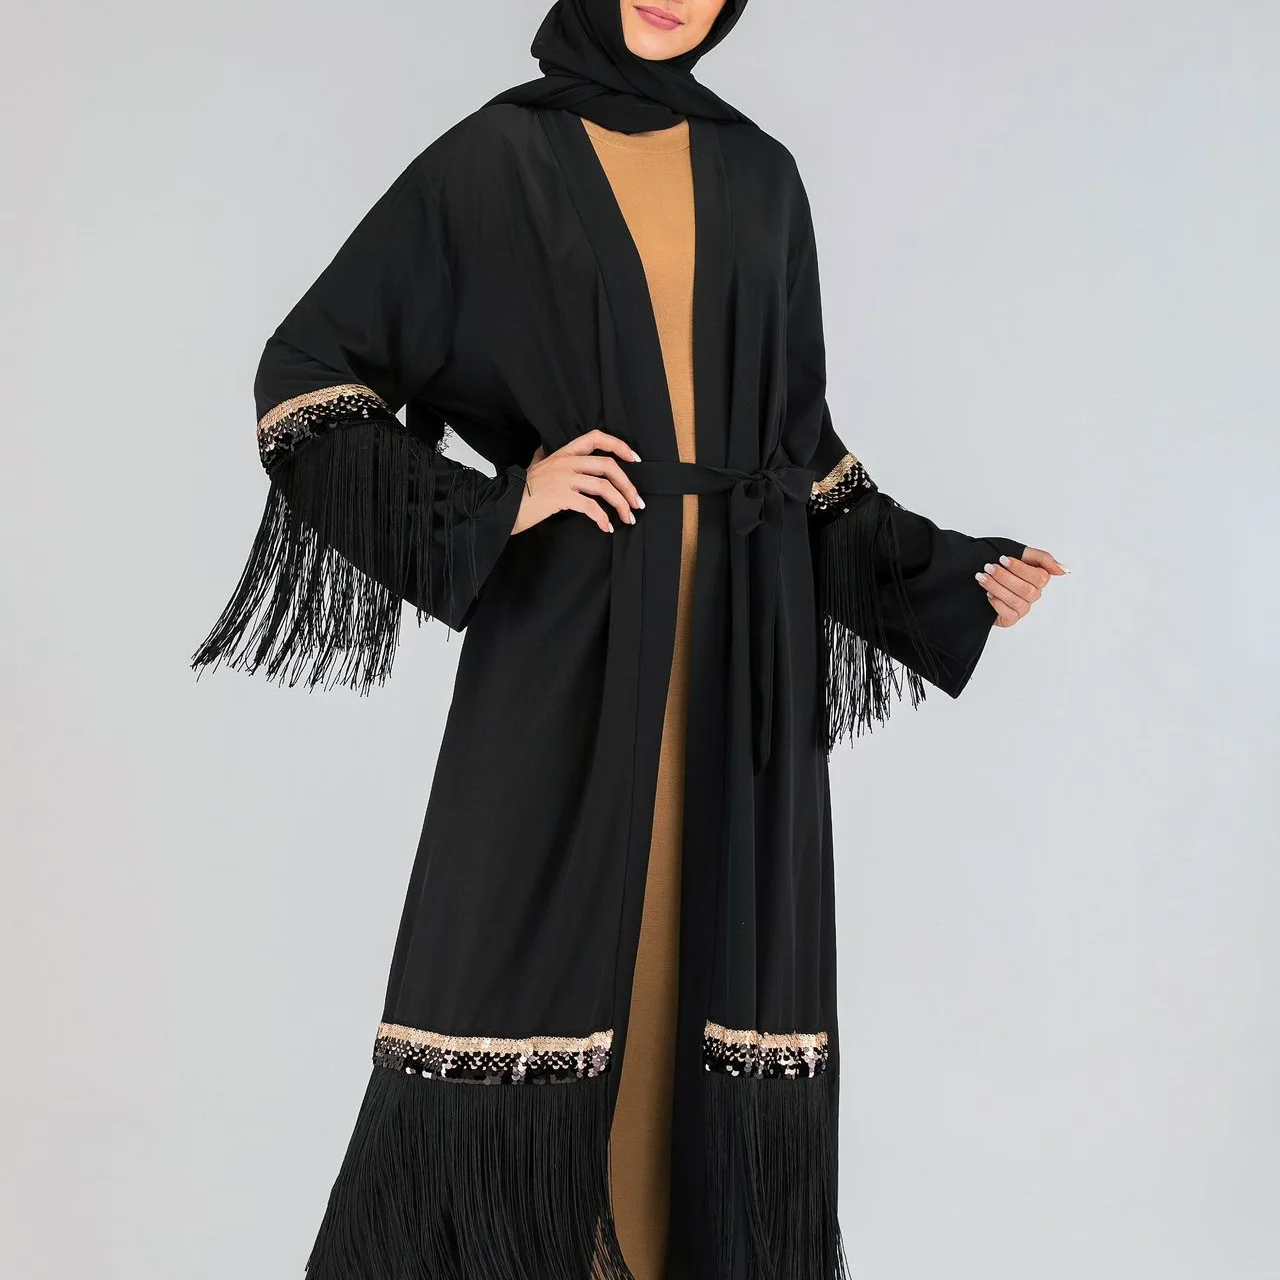 2021 New Muslim Apparel Dubai Hot Style Middle East Turkish Islamic Fashion Sequined Tassel Abaya Cardigan European Clothing